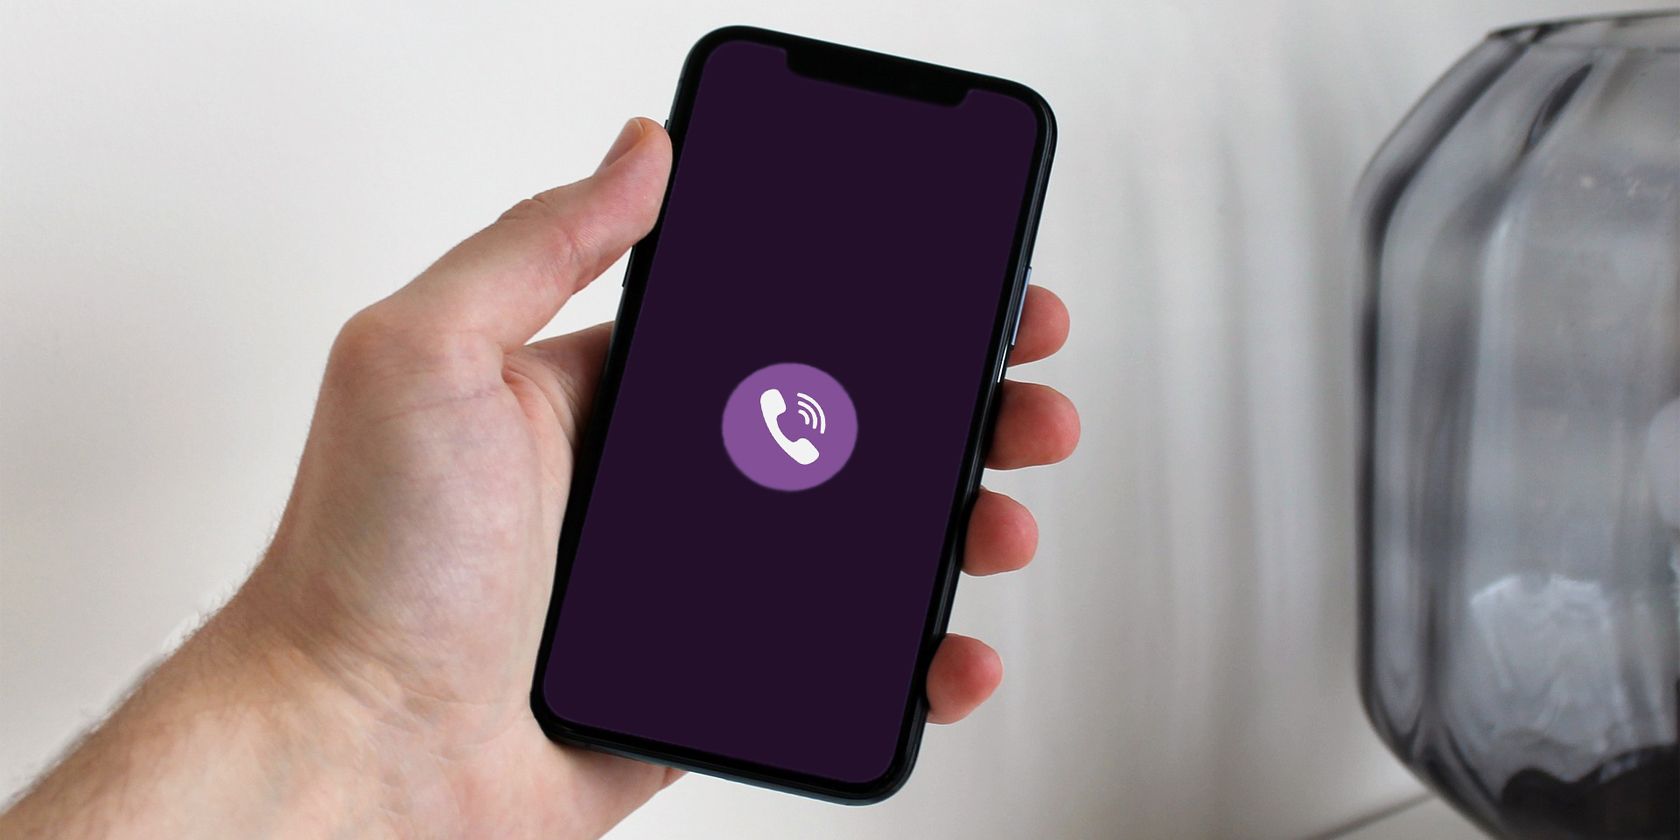 Viber app on phone